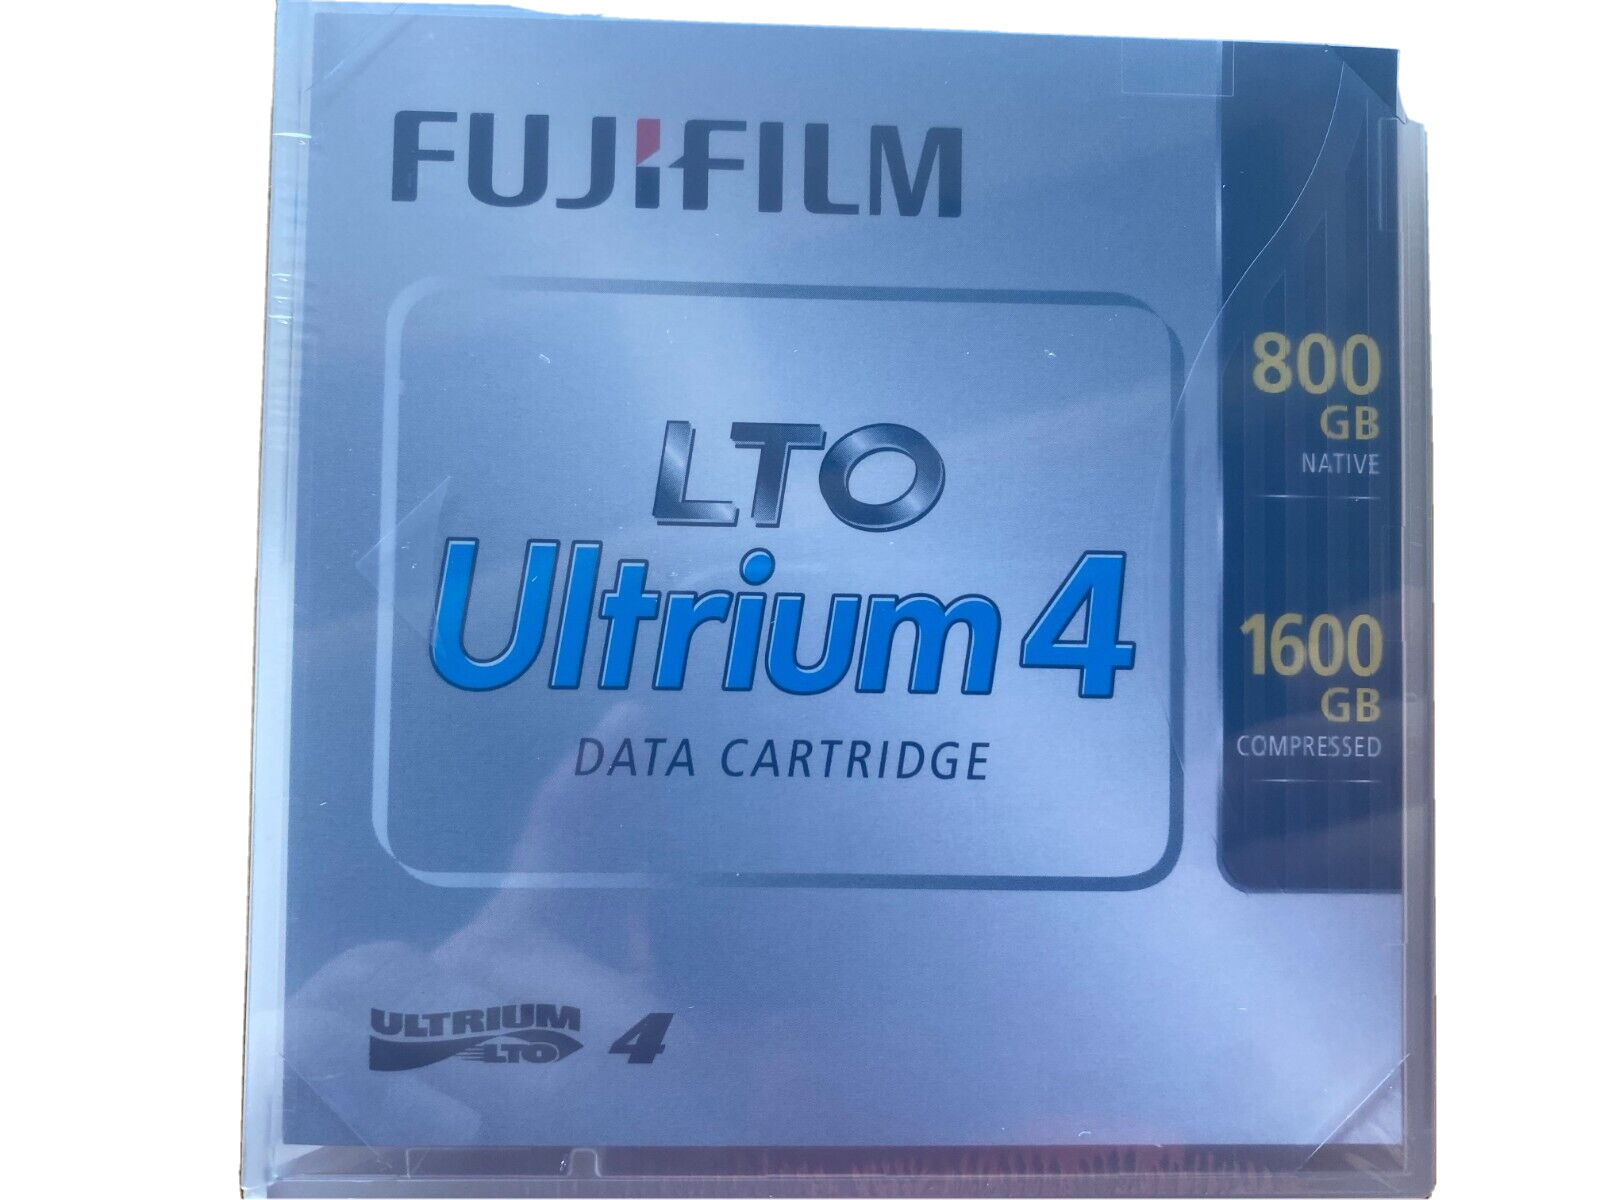 Brand New FujiFilm LTO Ultrium 4 800 GB Data Cartridge (Pack of 5)